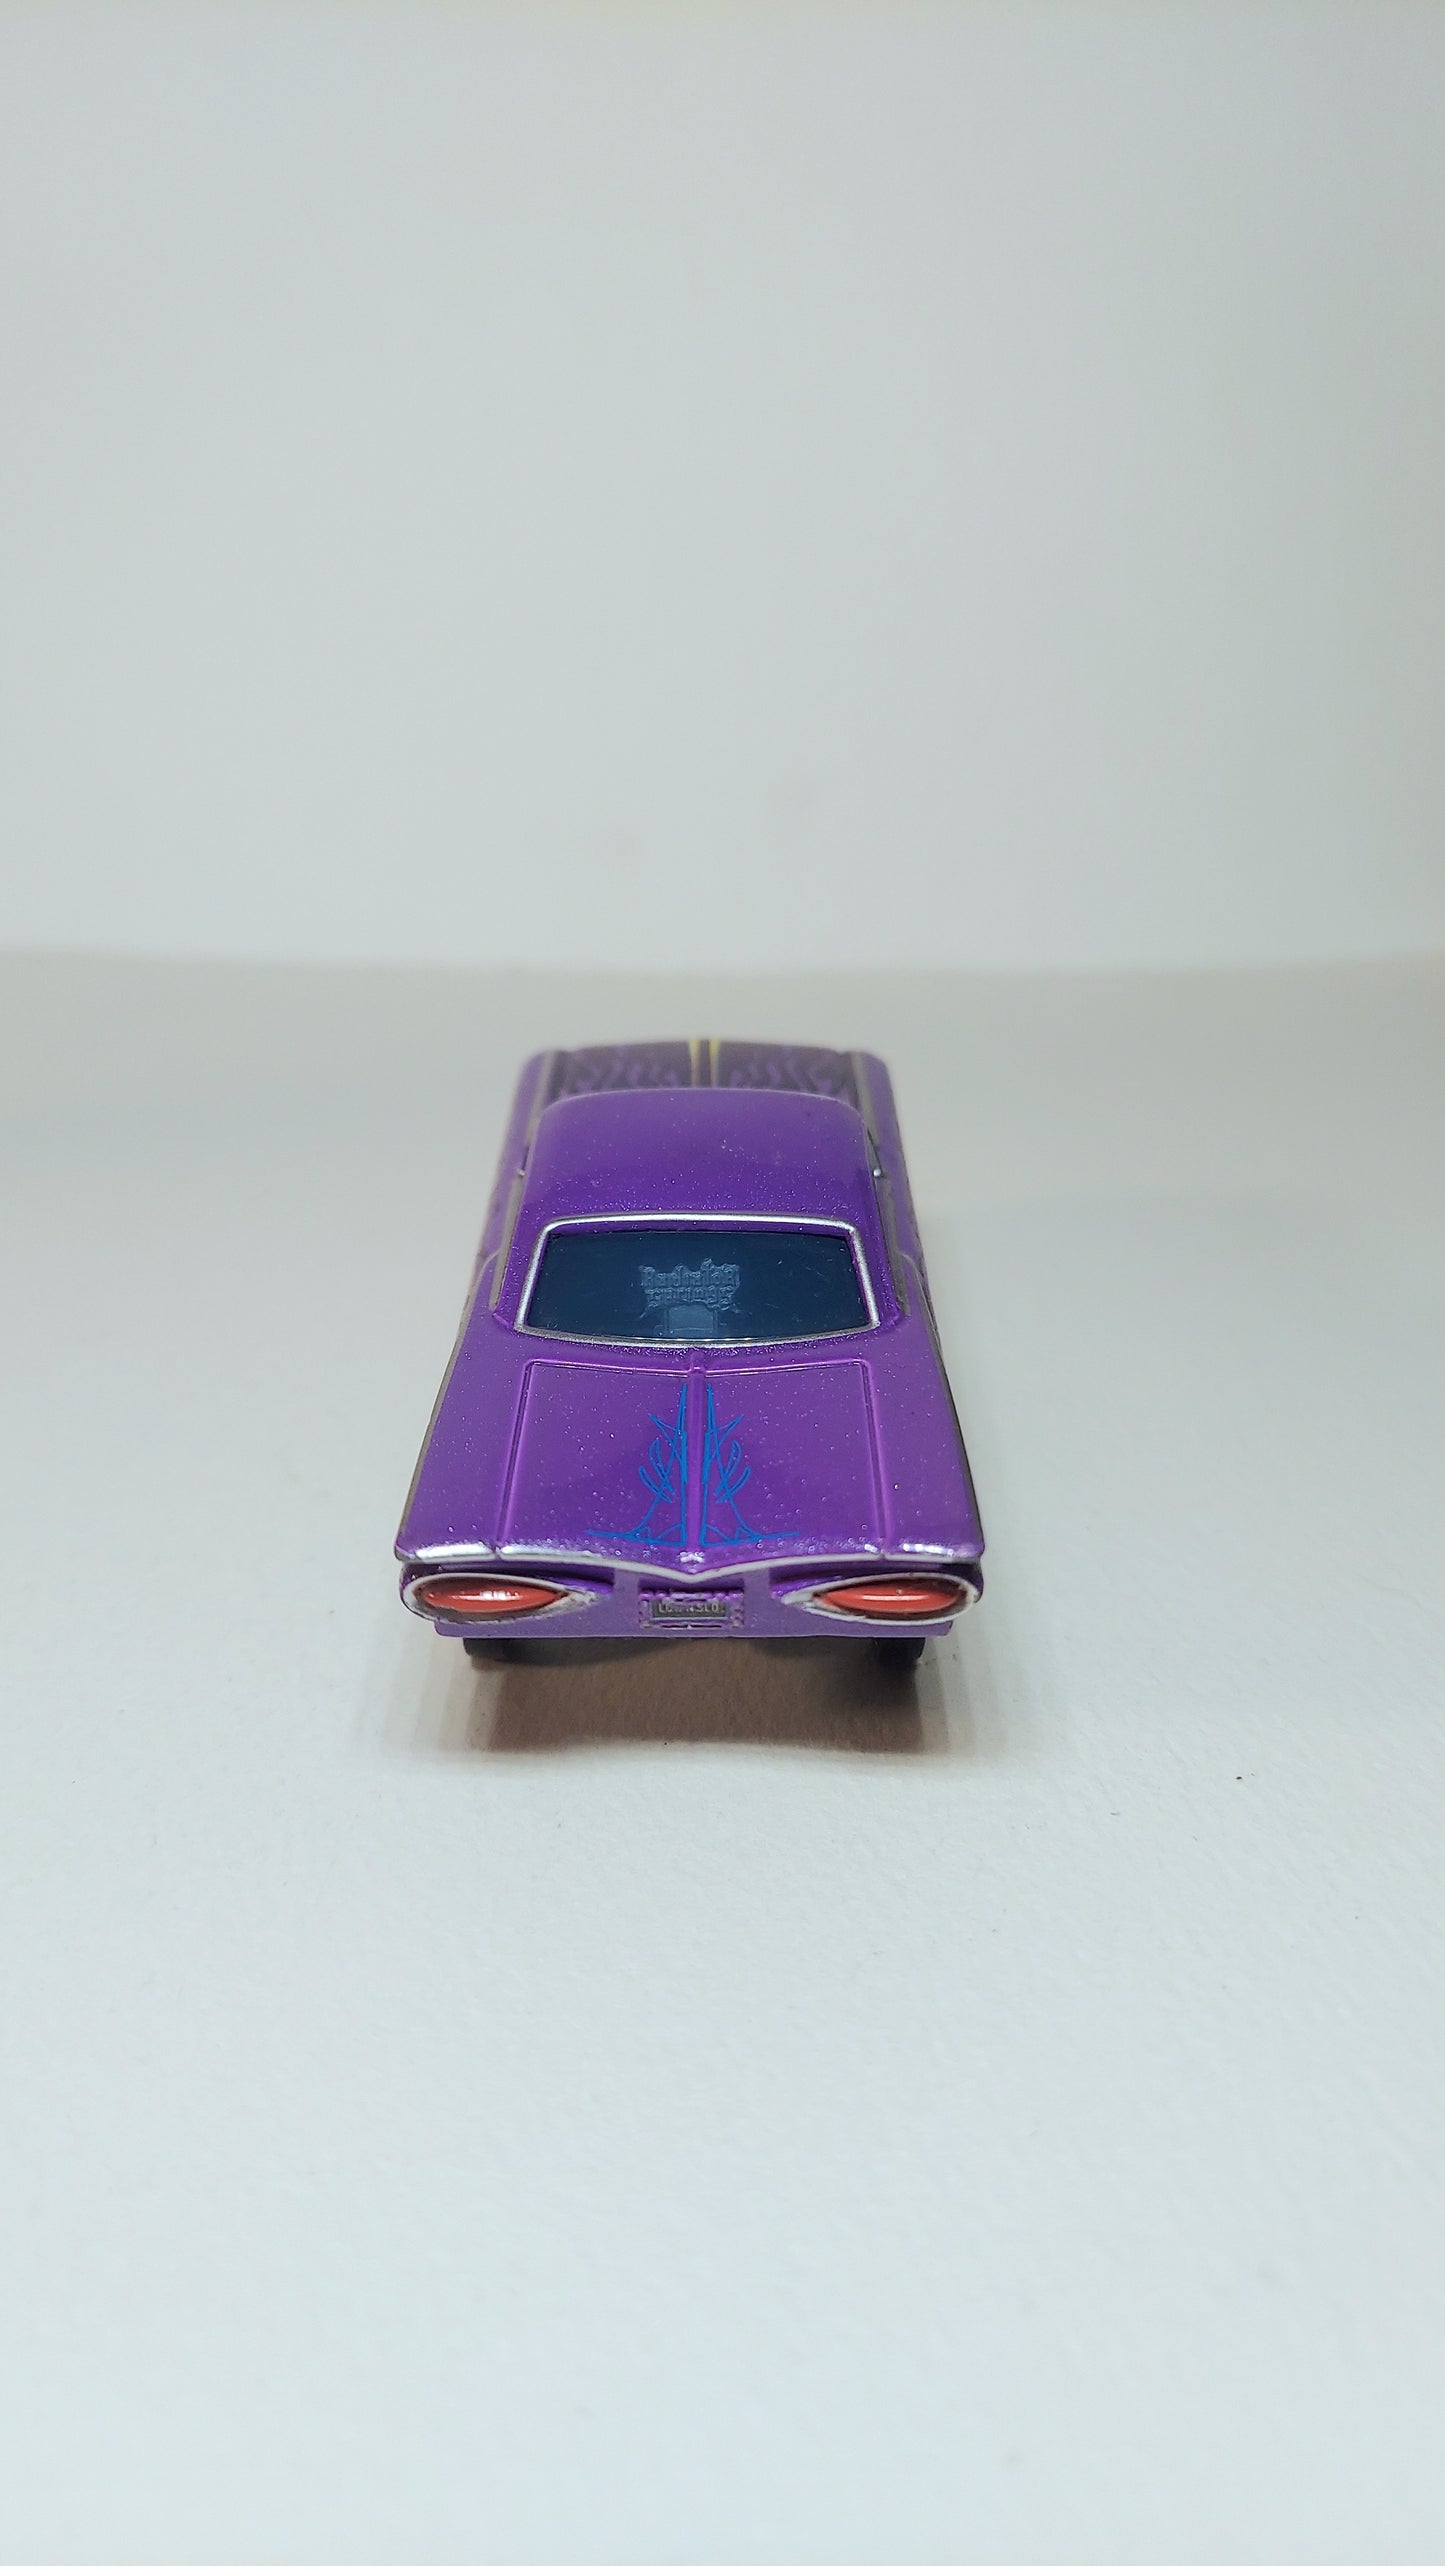 Disney Mattel Cars 2 Diecast Vehicle Ramone Hydraulic Purple Flames 2010 Figure